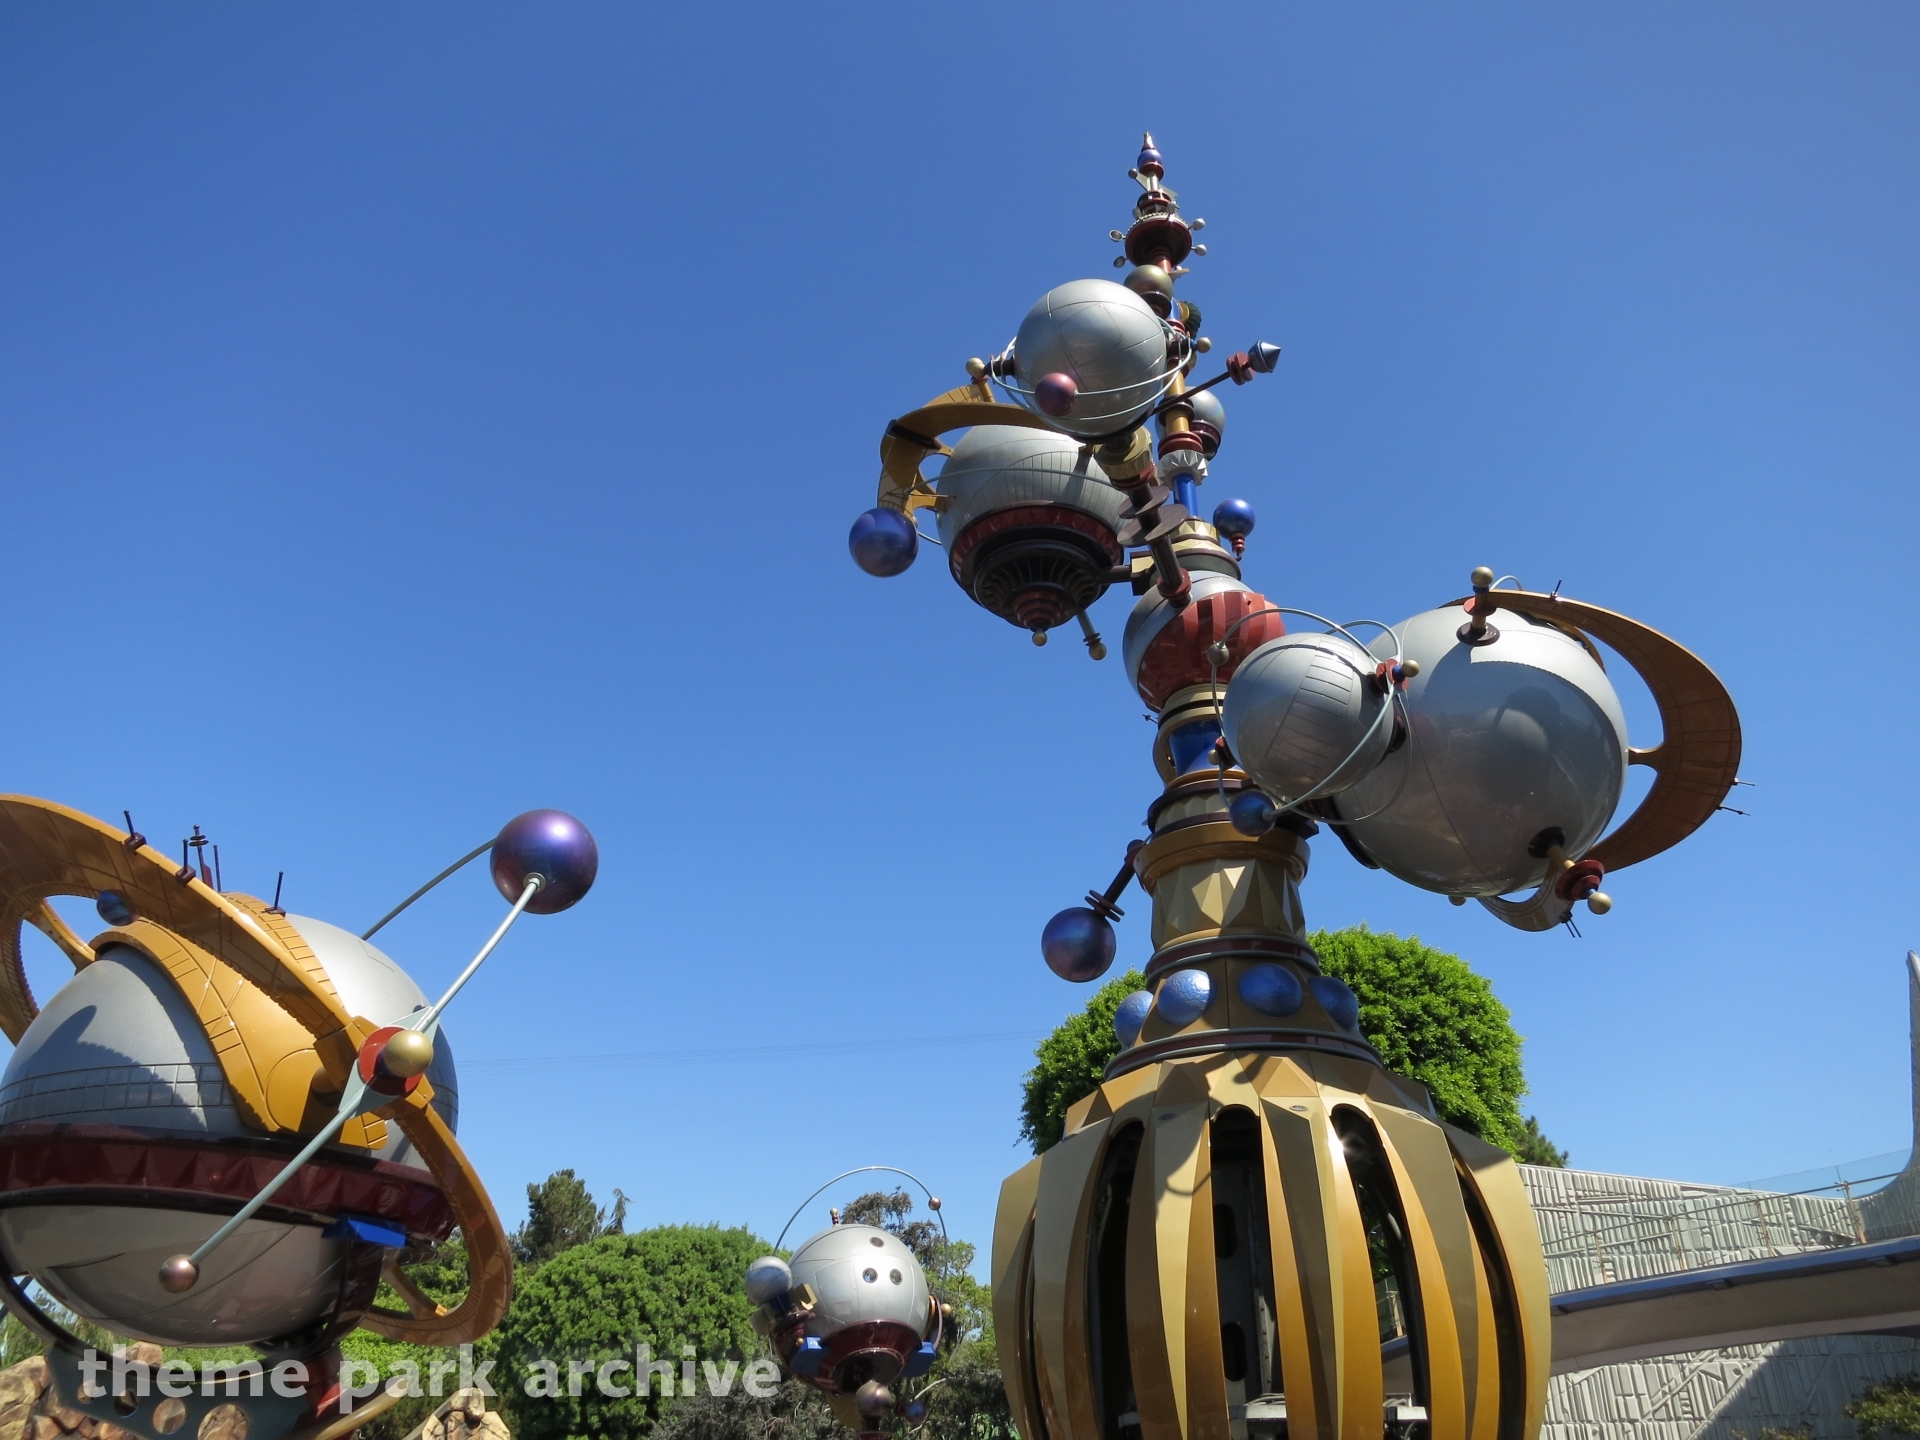 Astro Orbiter at Disneyland | Theme Park Archive